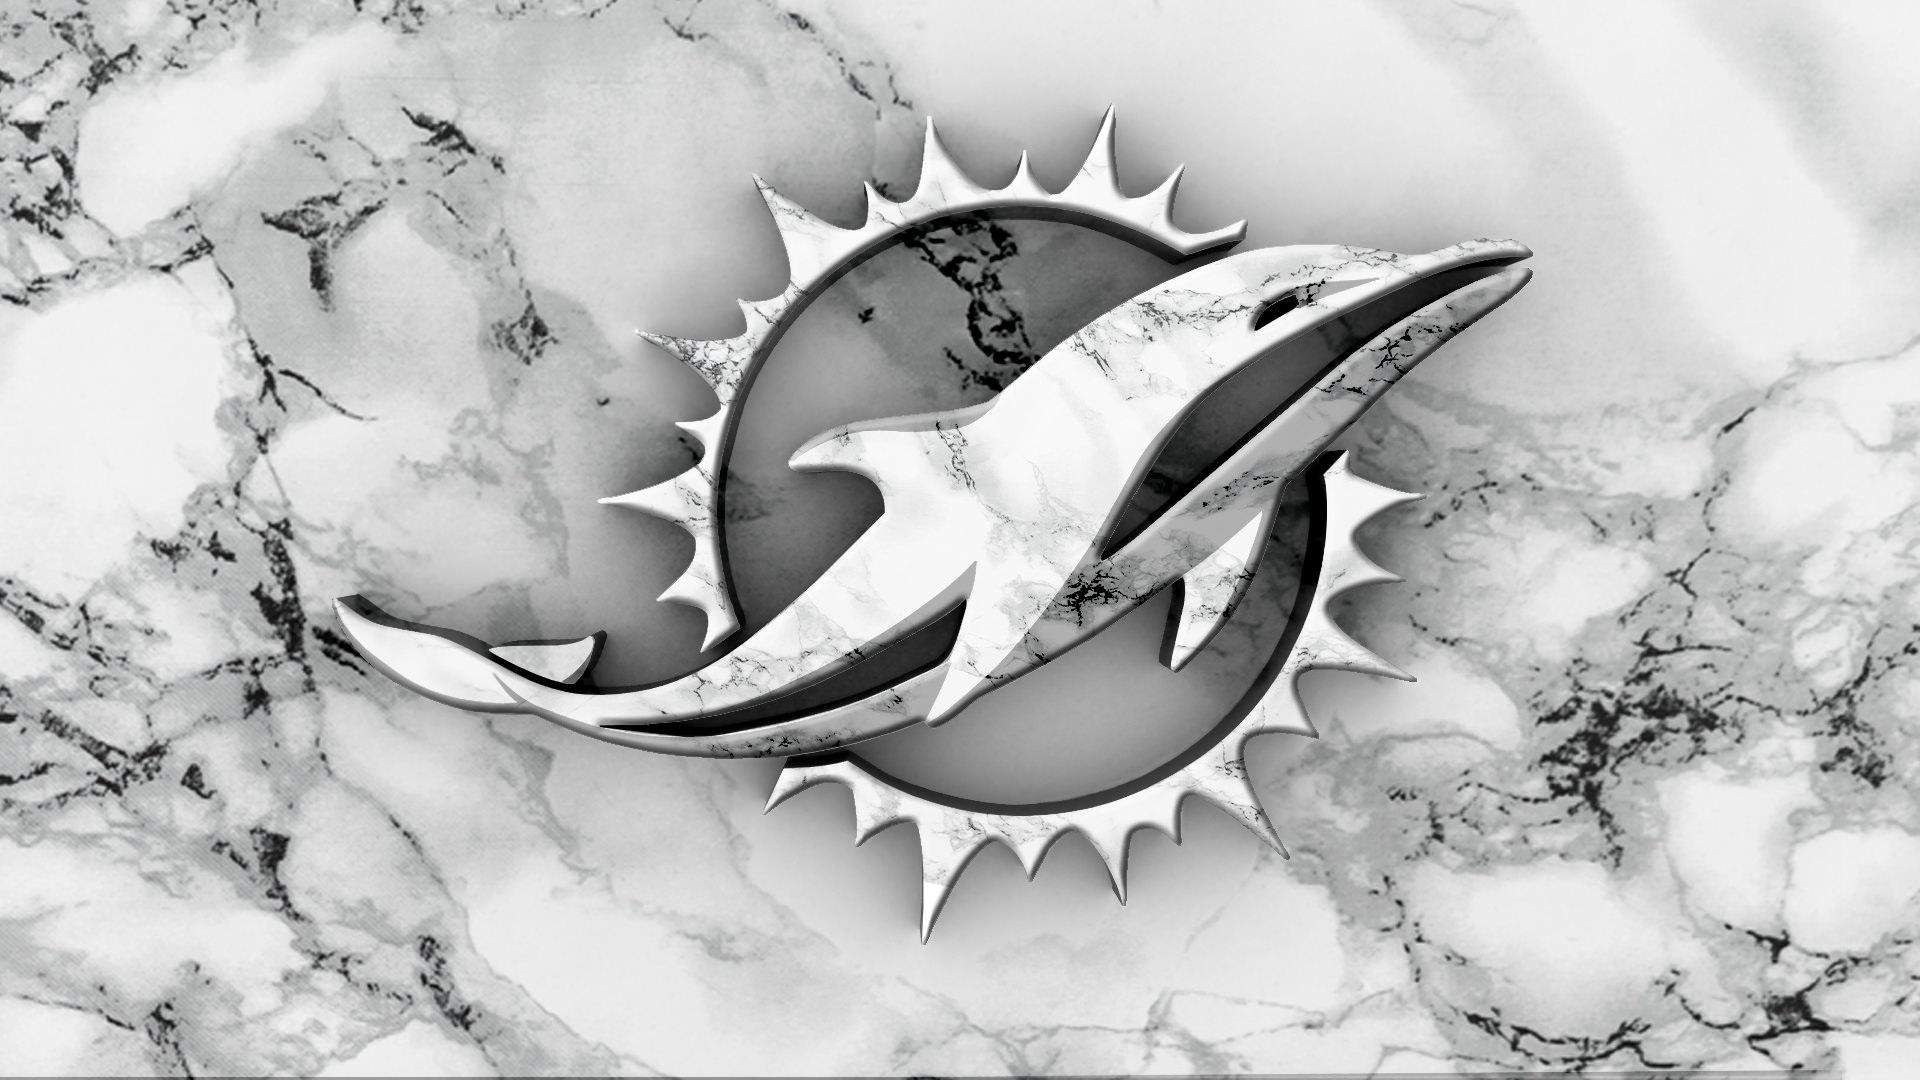 miami dolphins 3d logo iphone case